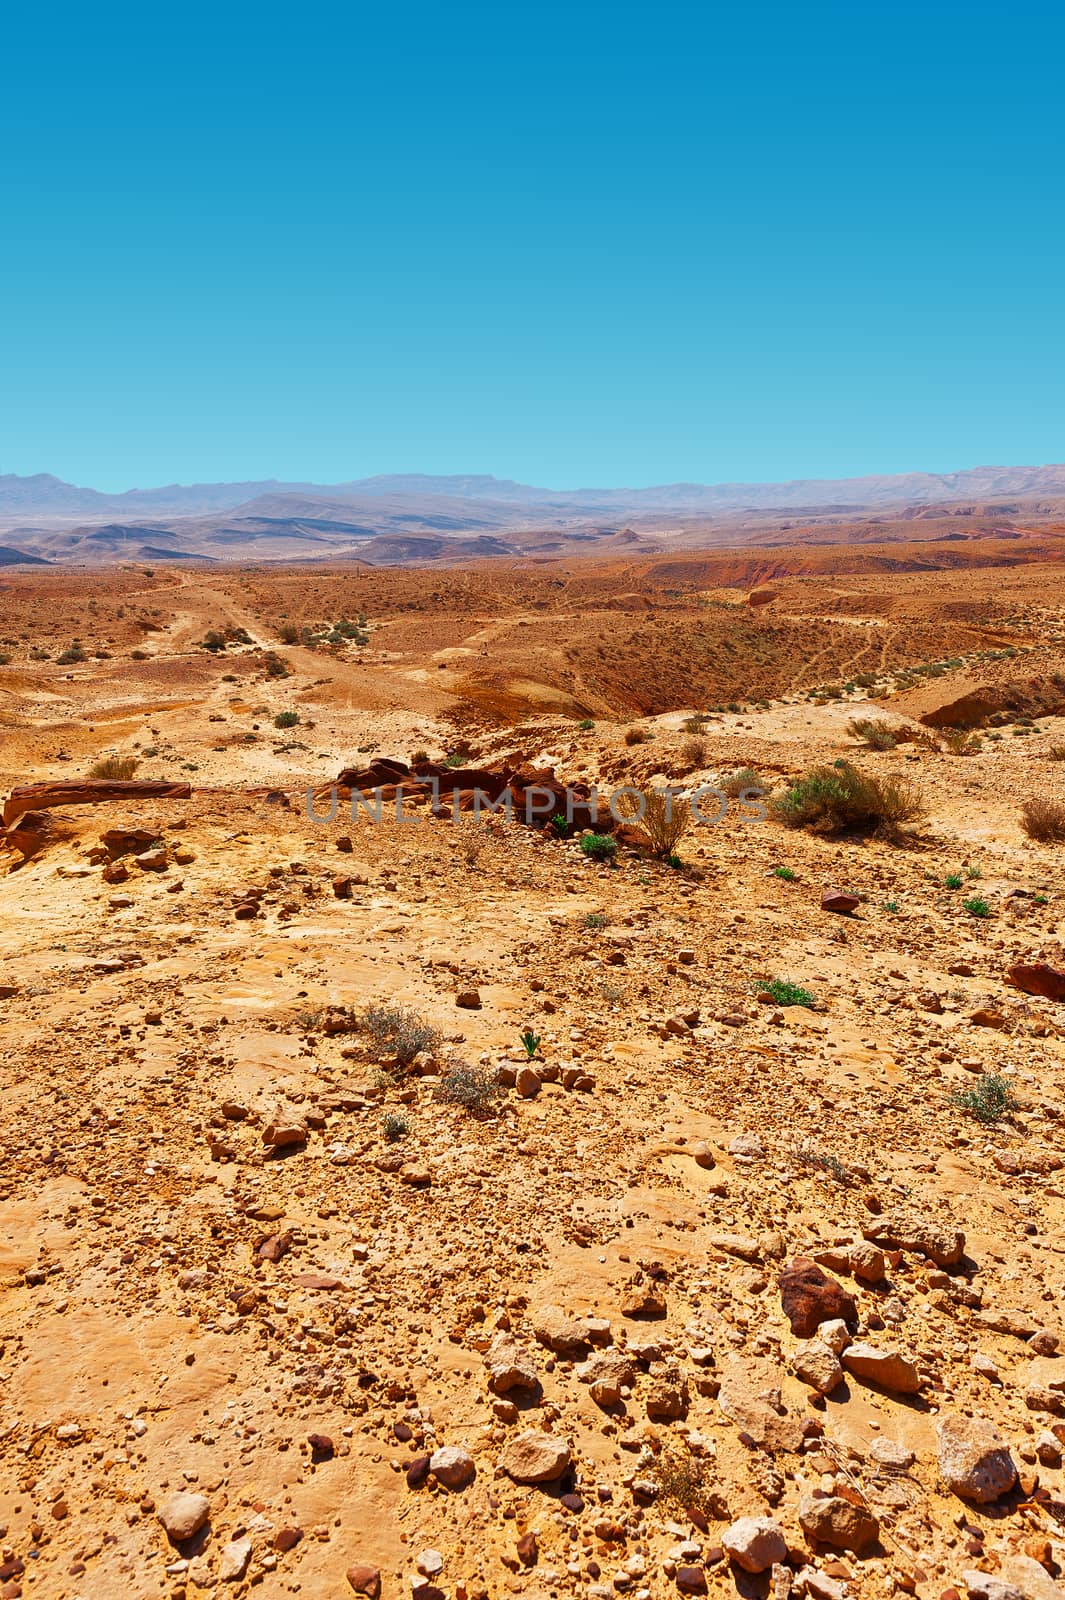 Grand Crater in Negev Desert, Israel